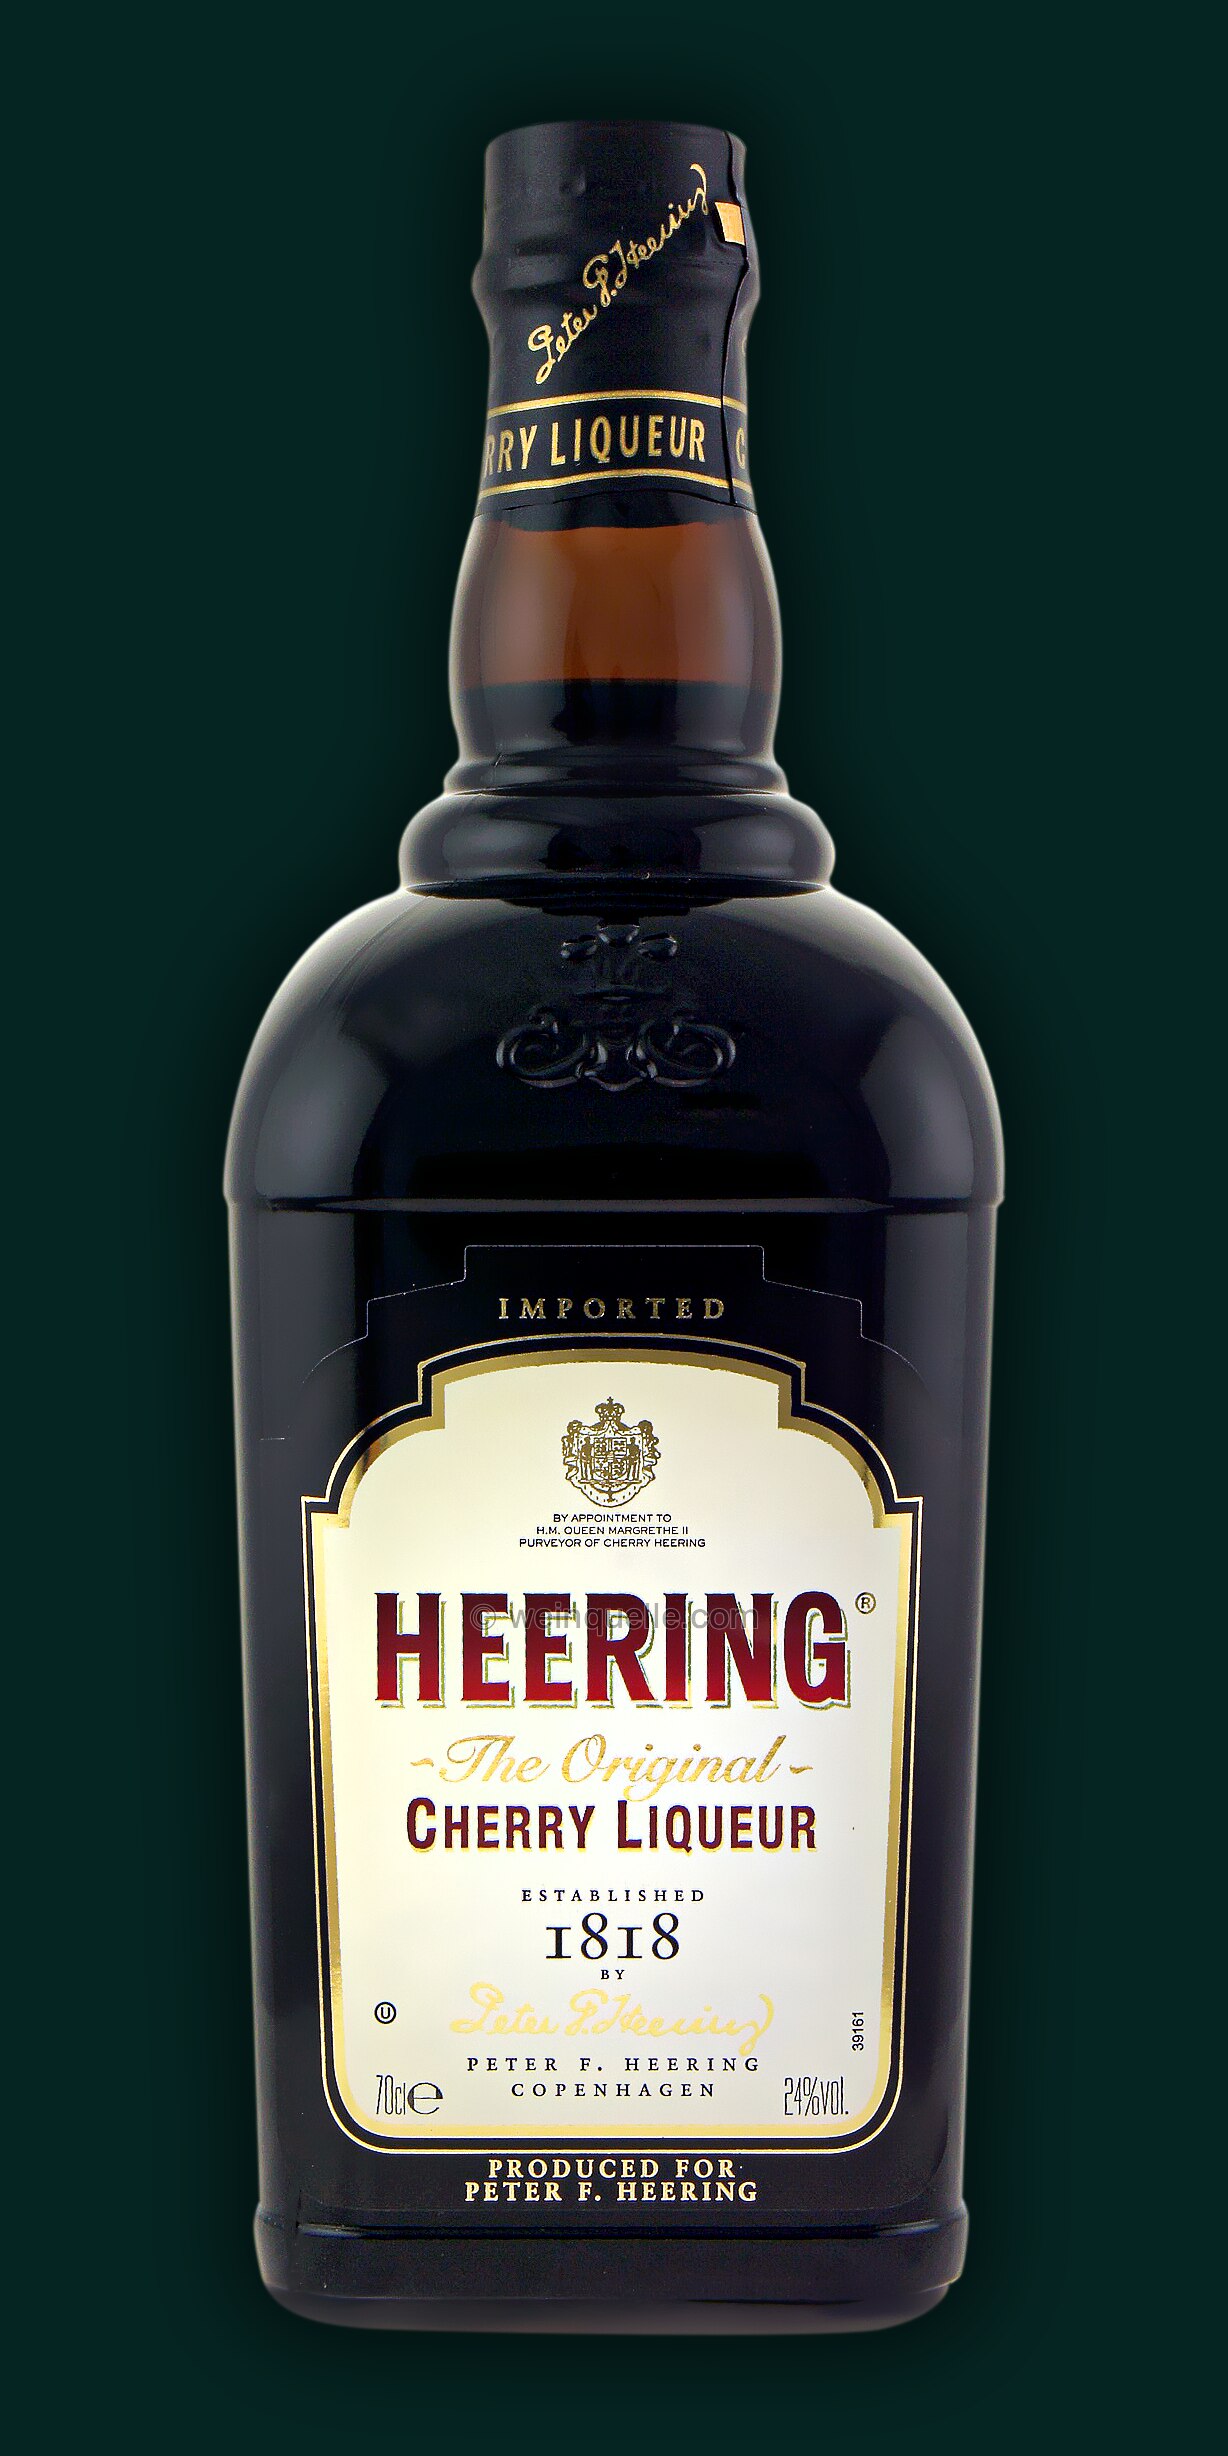 Heering Liqueur, Cherry 16,70 Weinquelle Lühmann - €